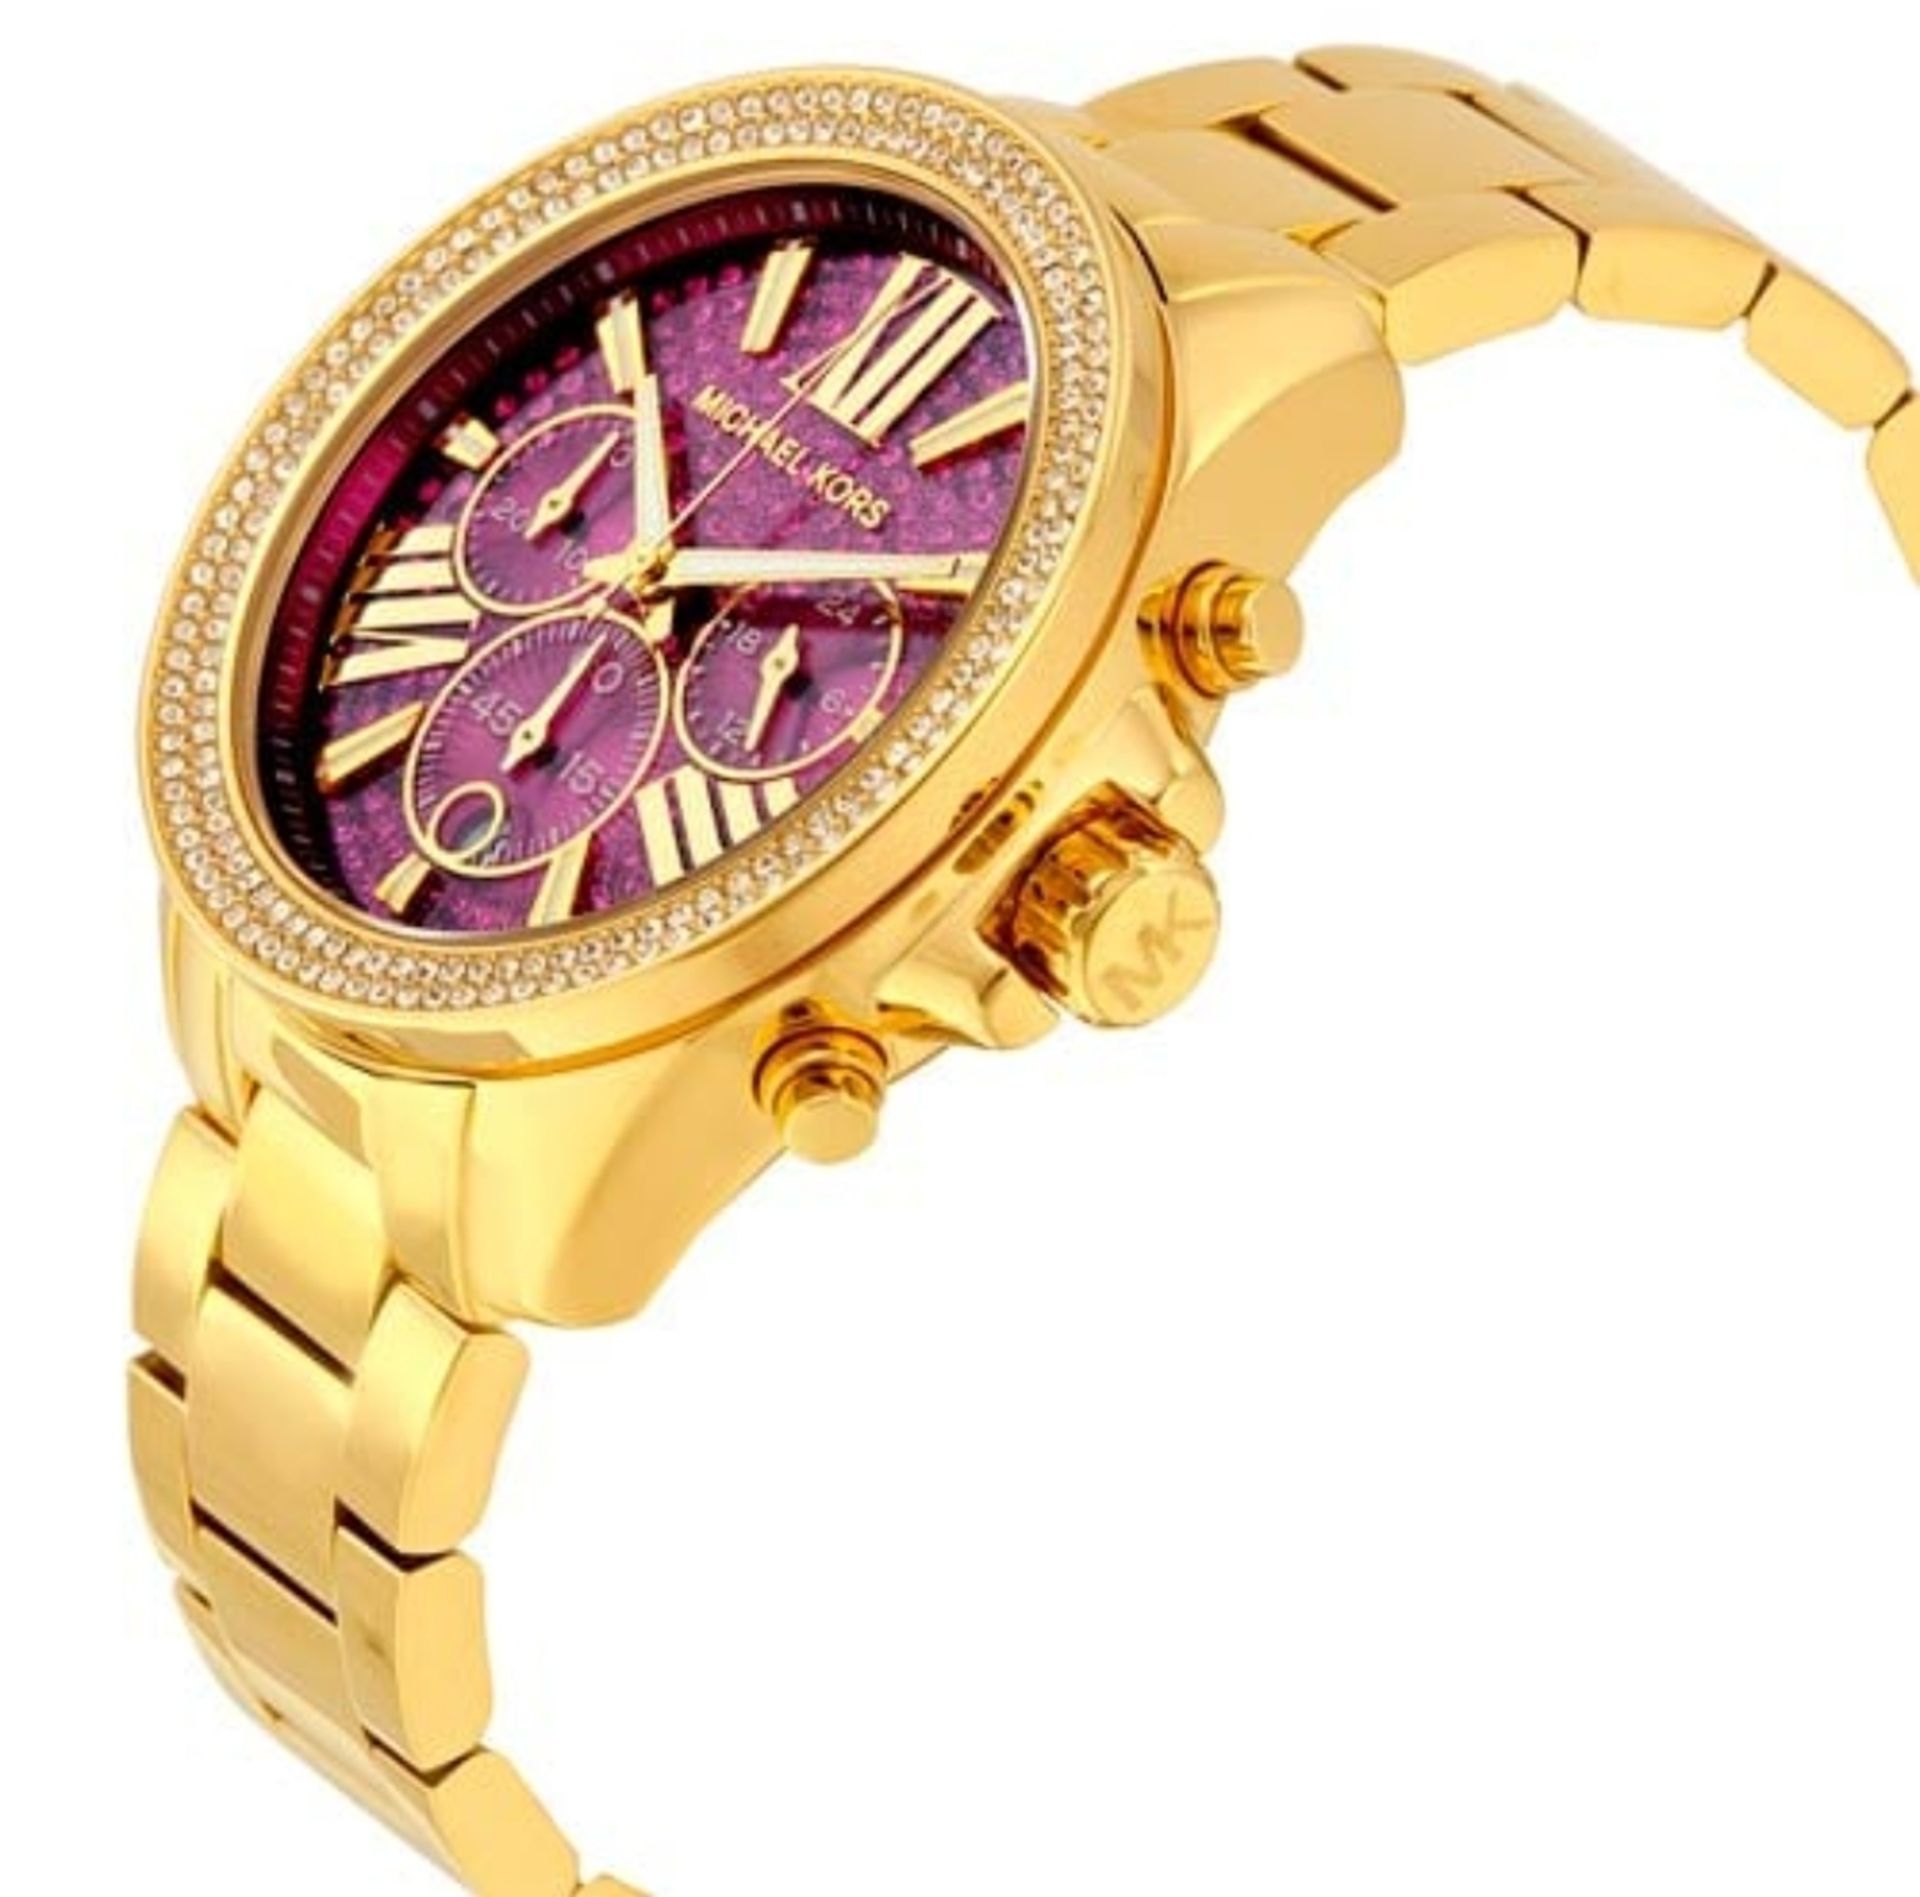 Michael Kors MK6290 Crystal Pave Gold Tone Ladies Watch - Image 5 of 8